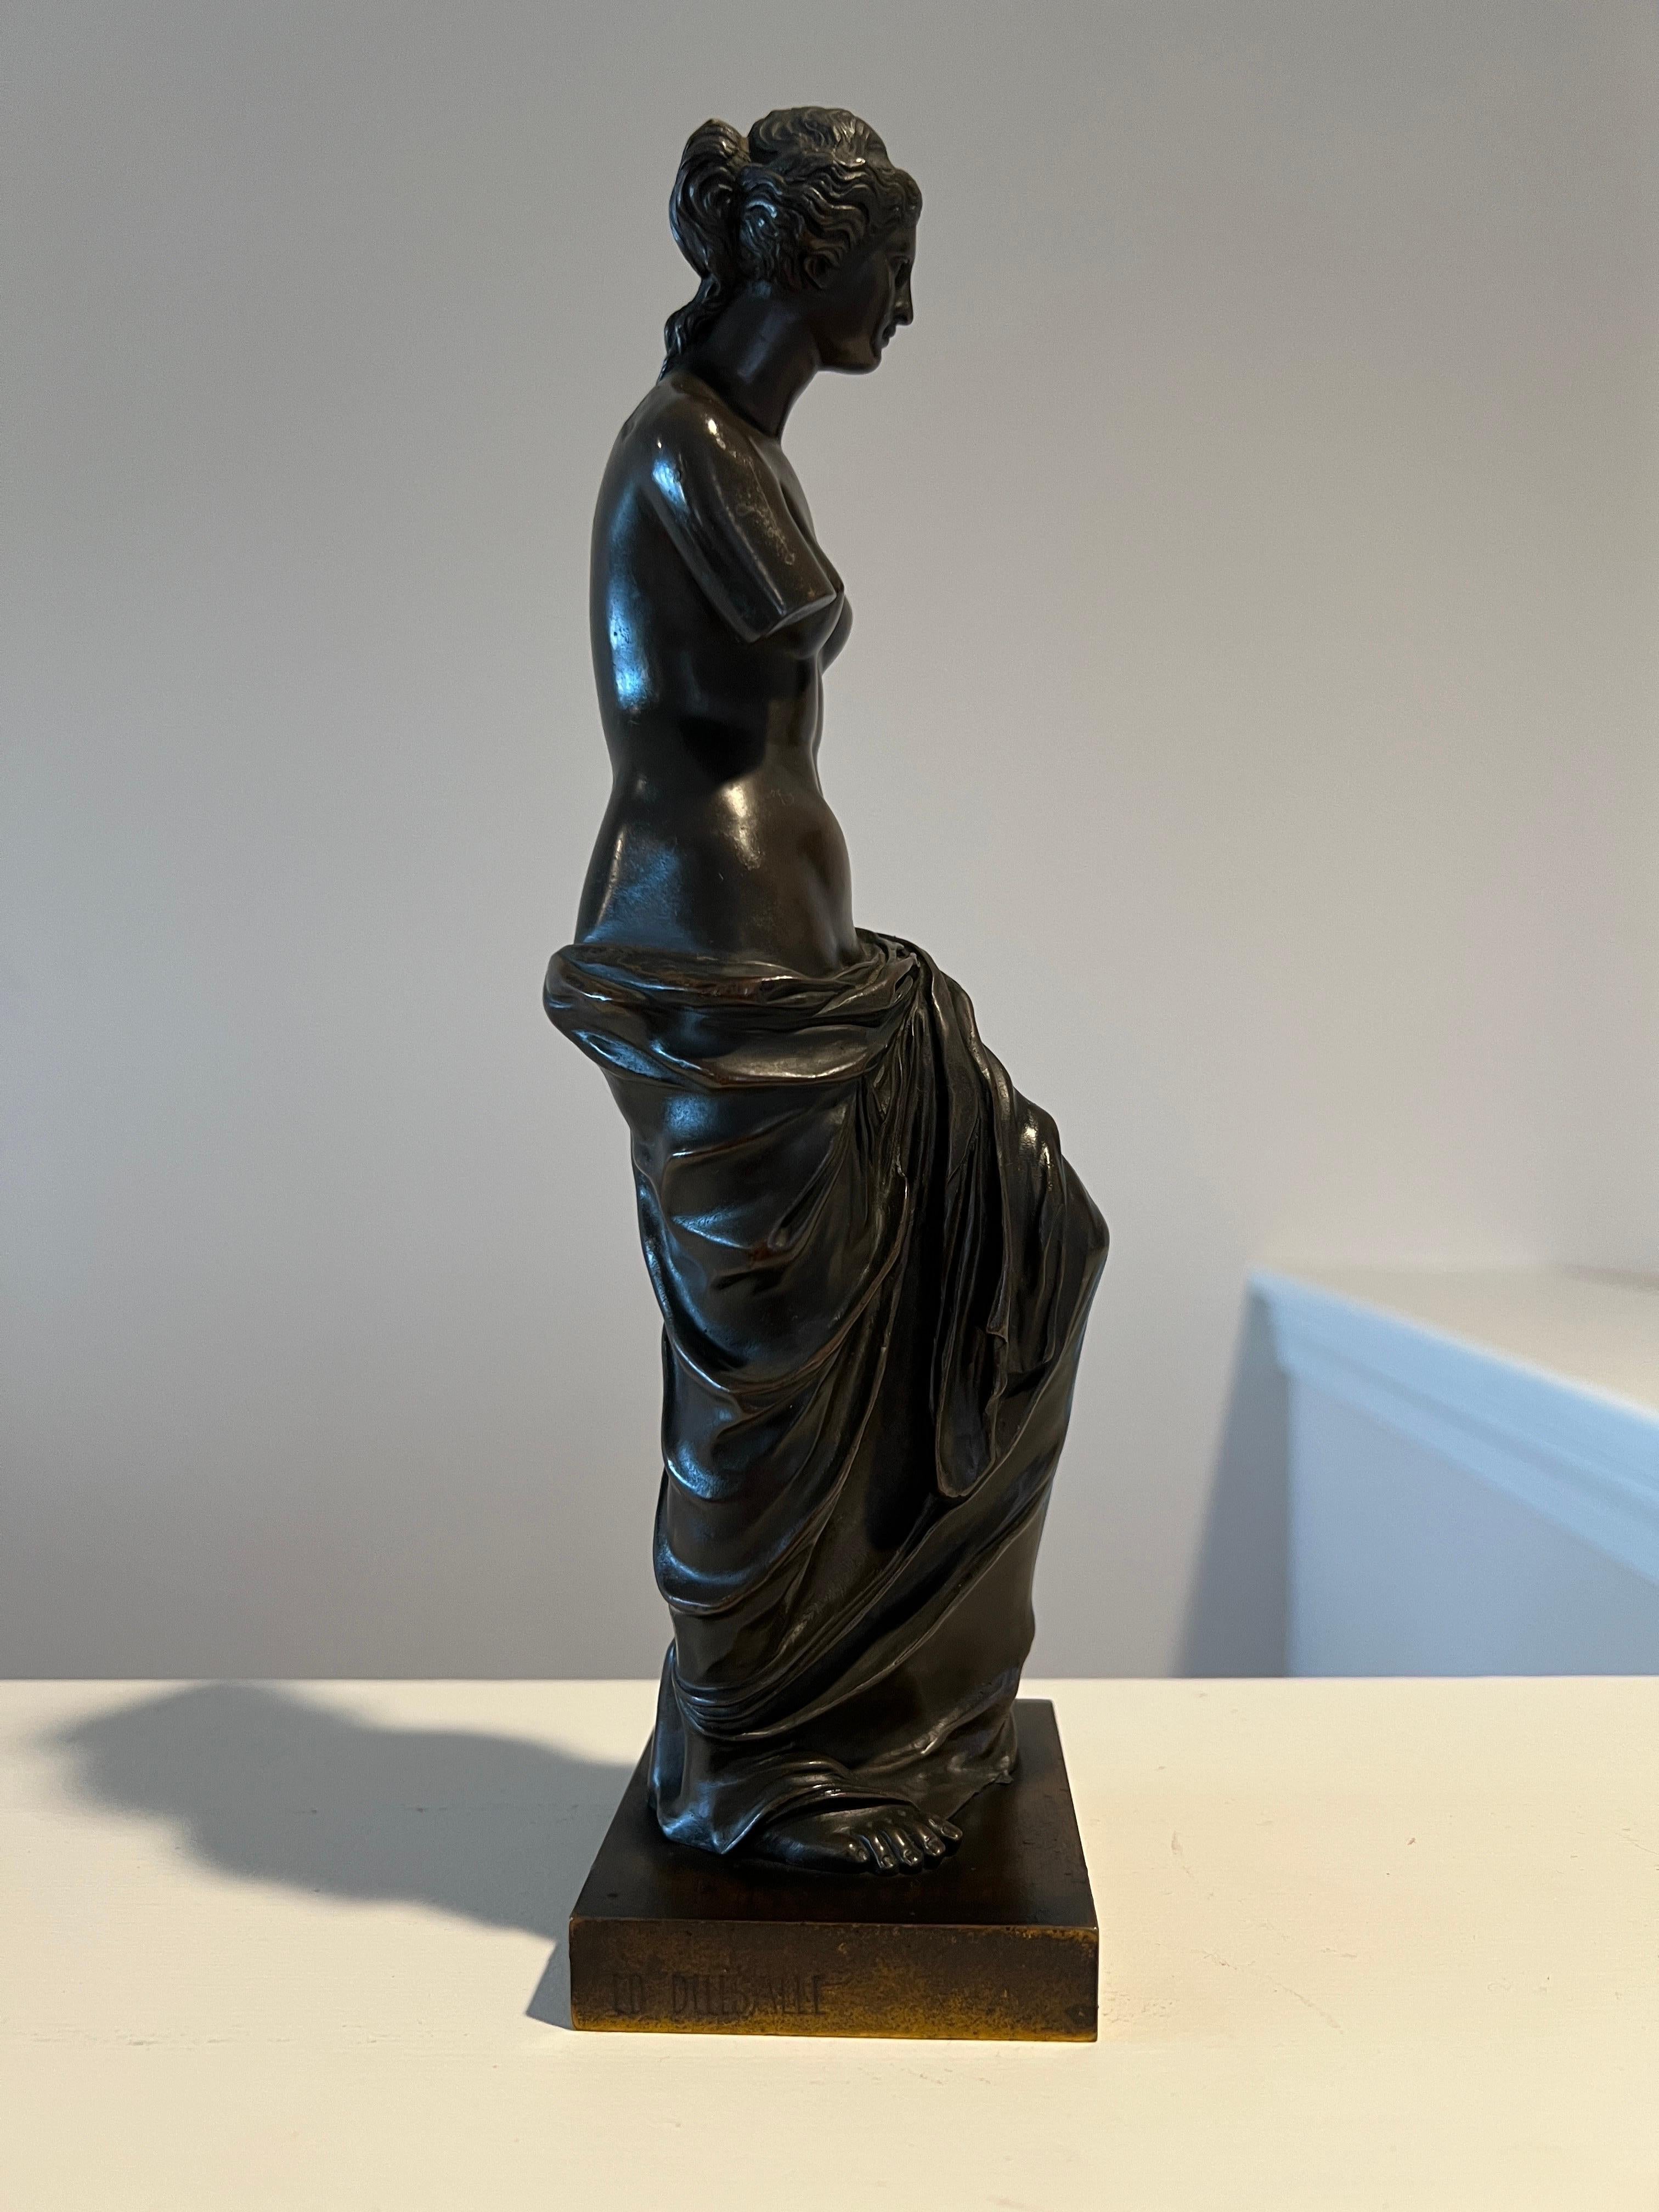 Edouard Henri Delesalle (French, 1823-1851), circa 1840.

A good quality Grand Tour model of Venus de Milo cast in bronze. 

